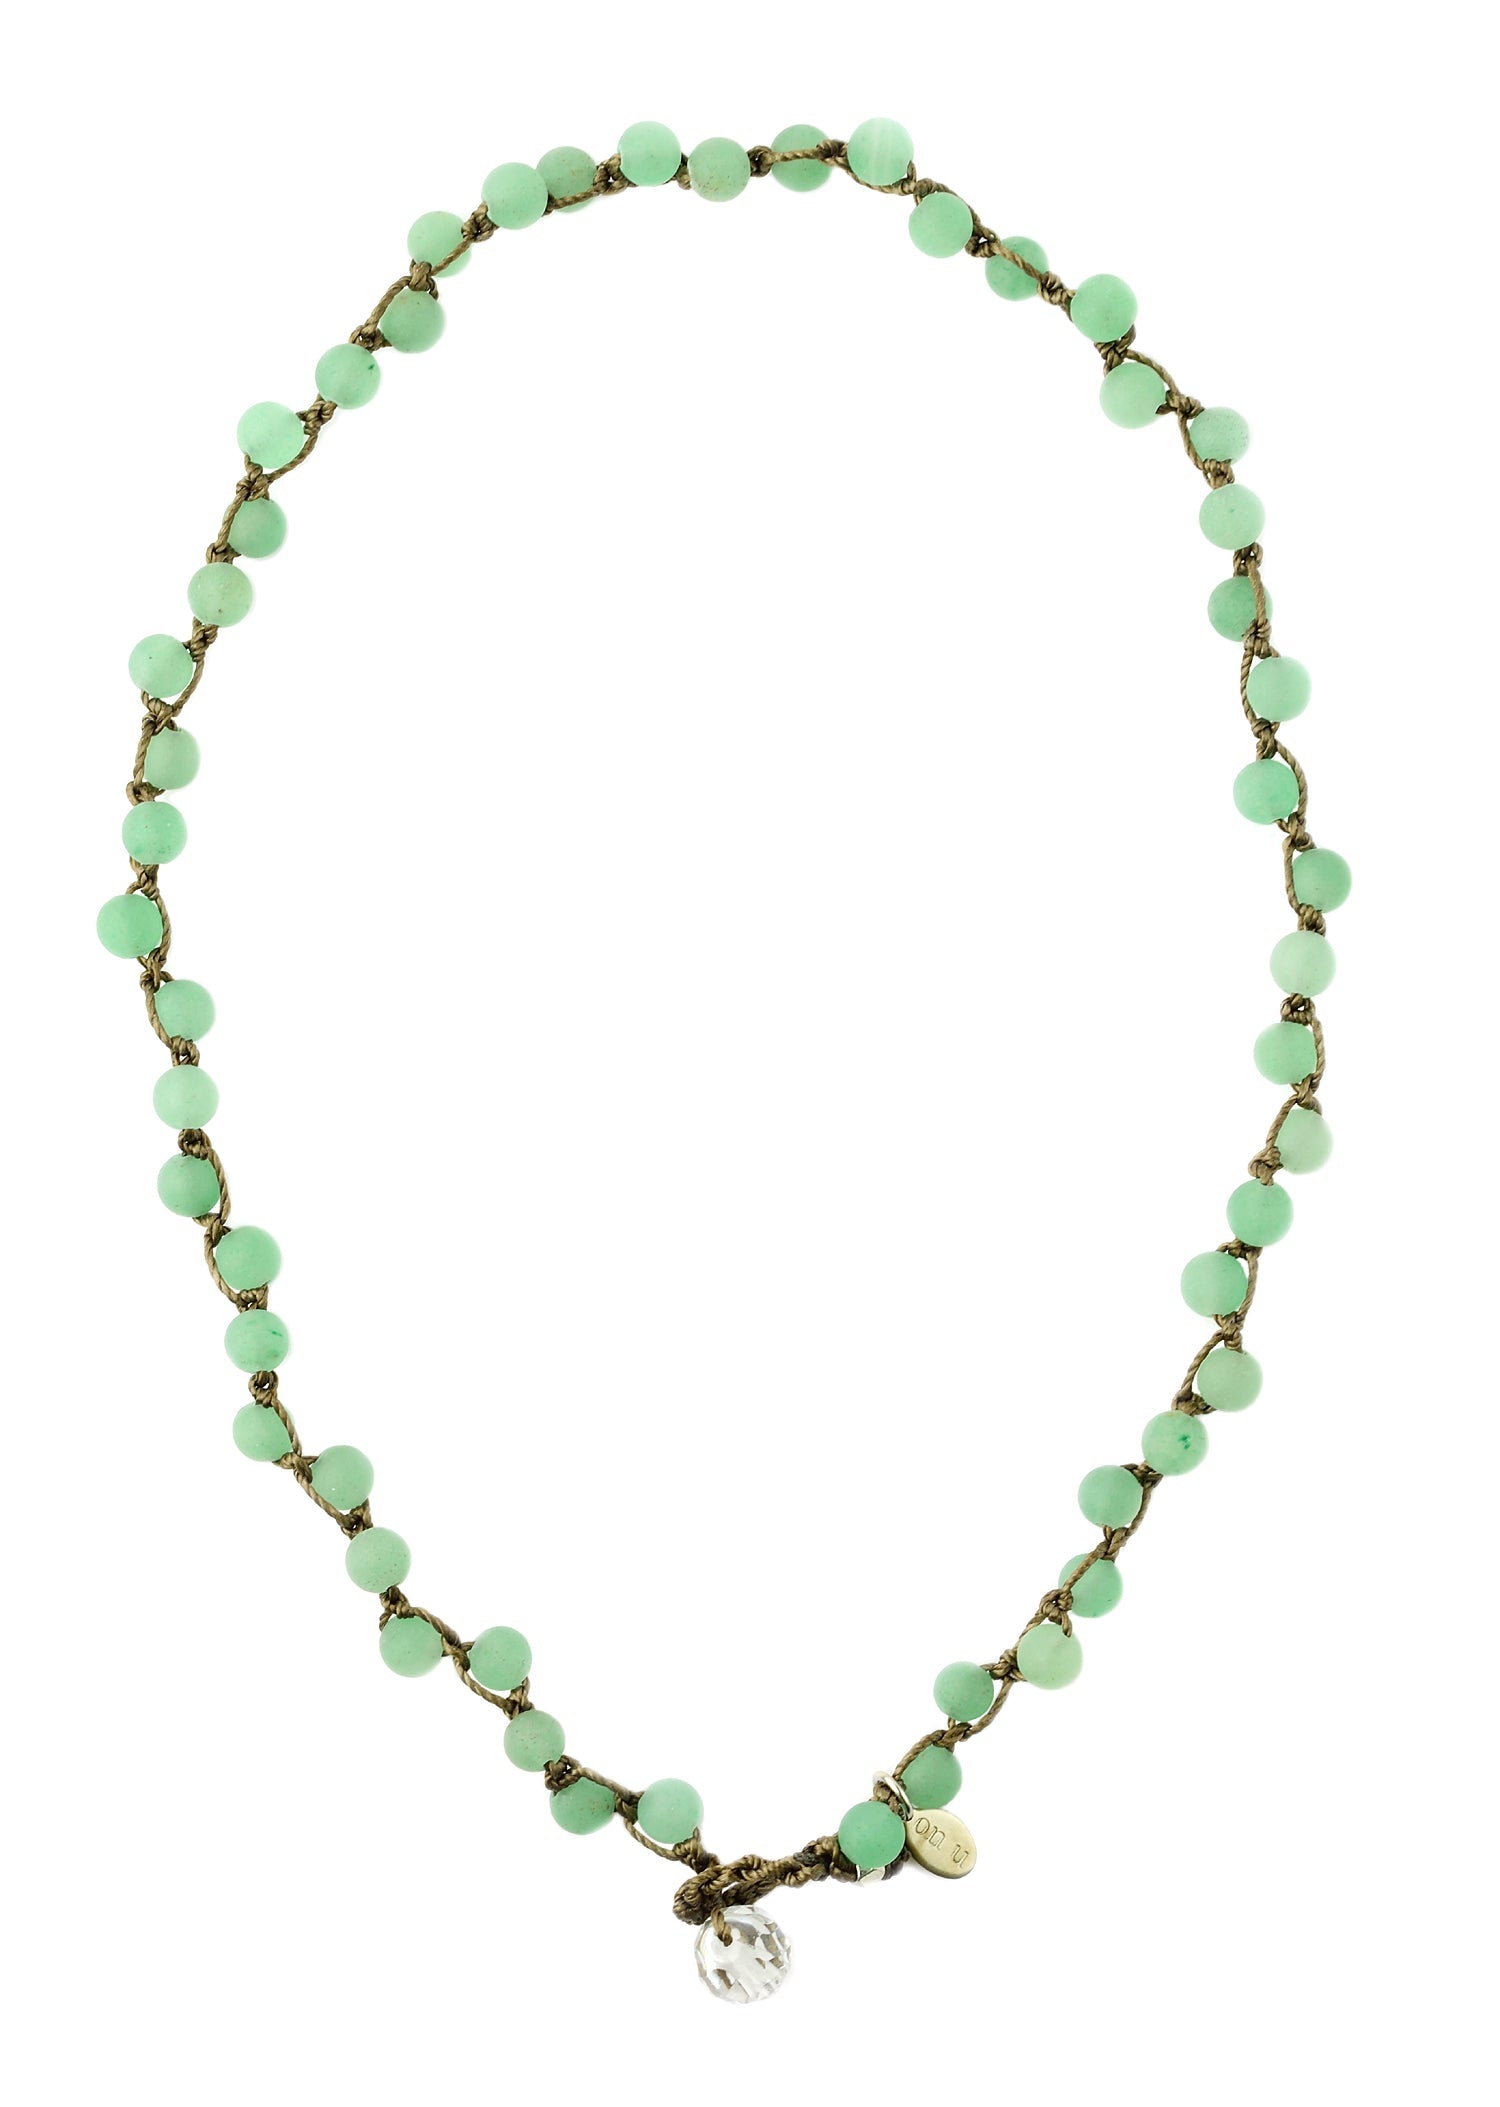 Hand-knotted semi-precious Aventurine necklace handmade by Donna Silvestri, On U Jewelry, Richmond, VA